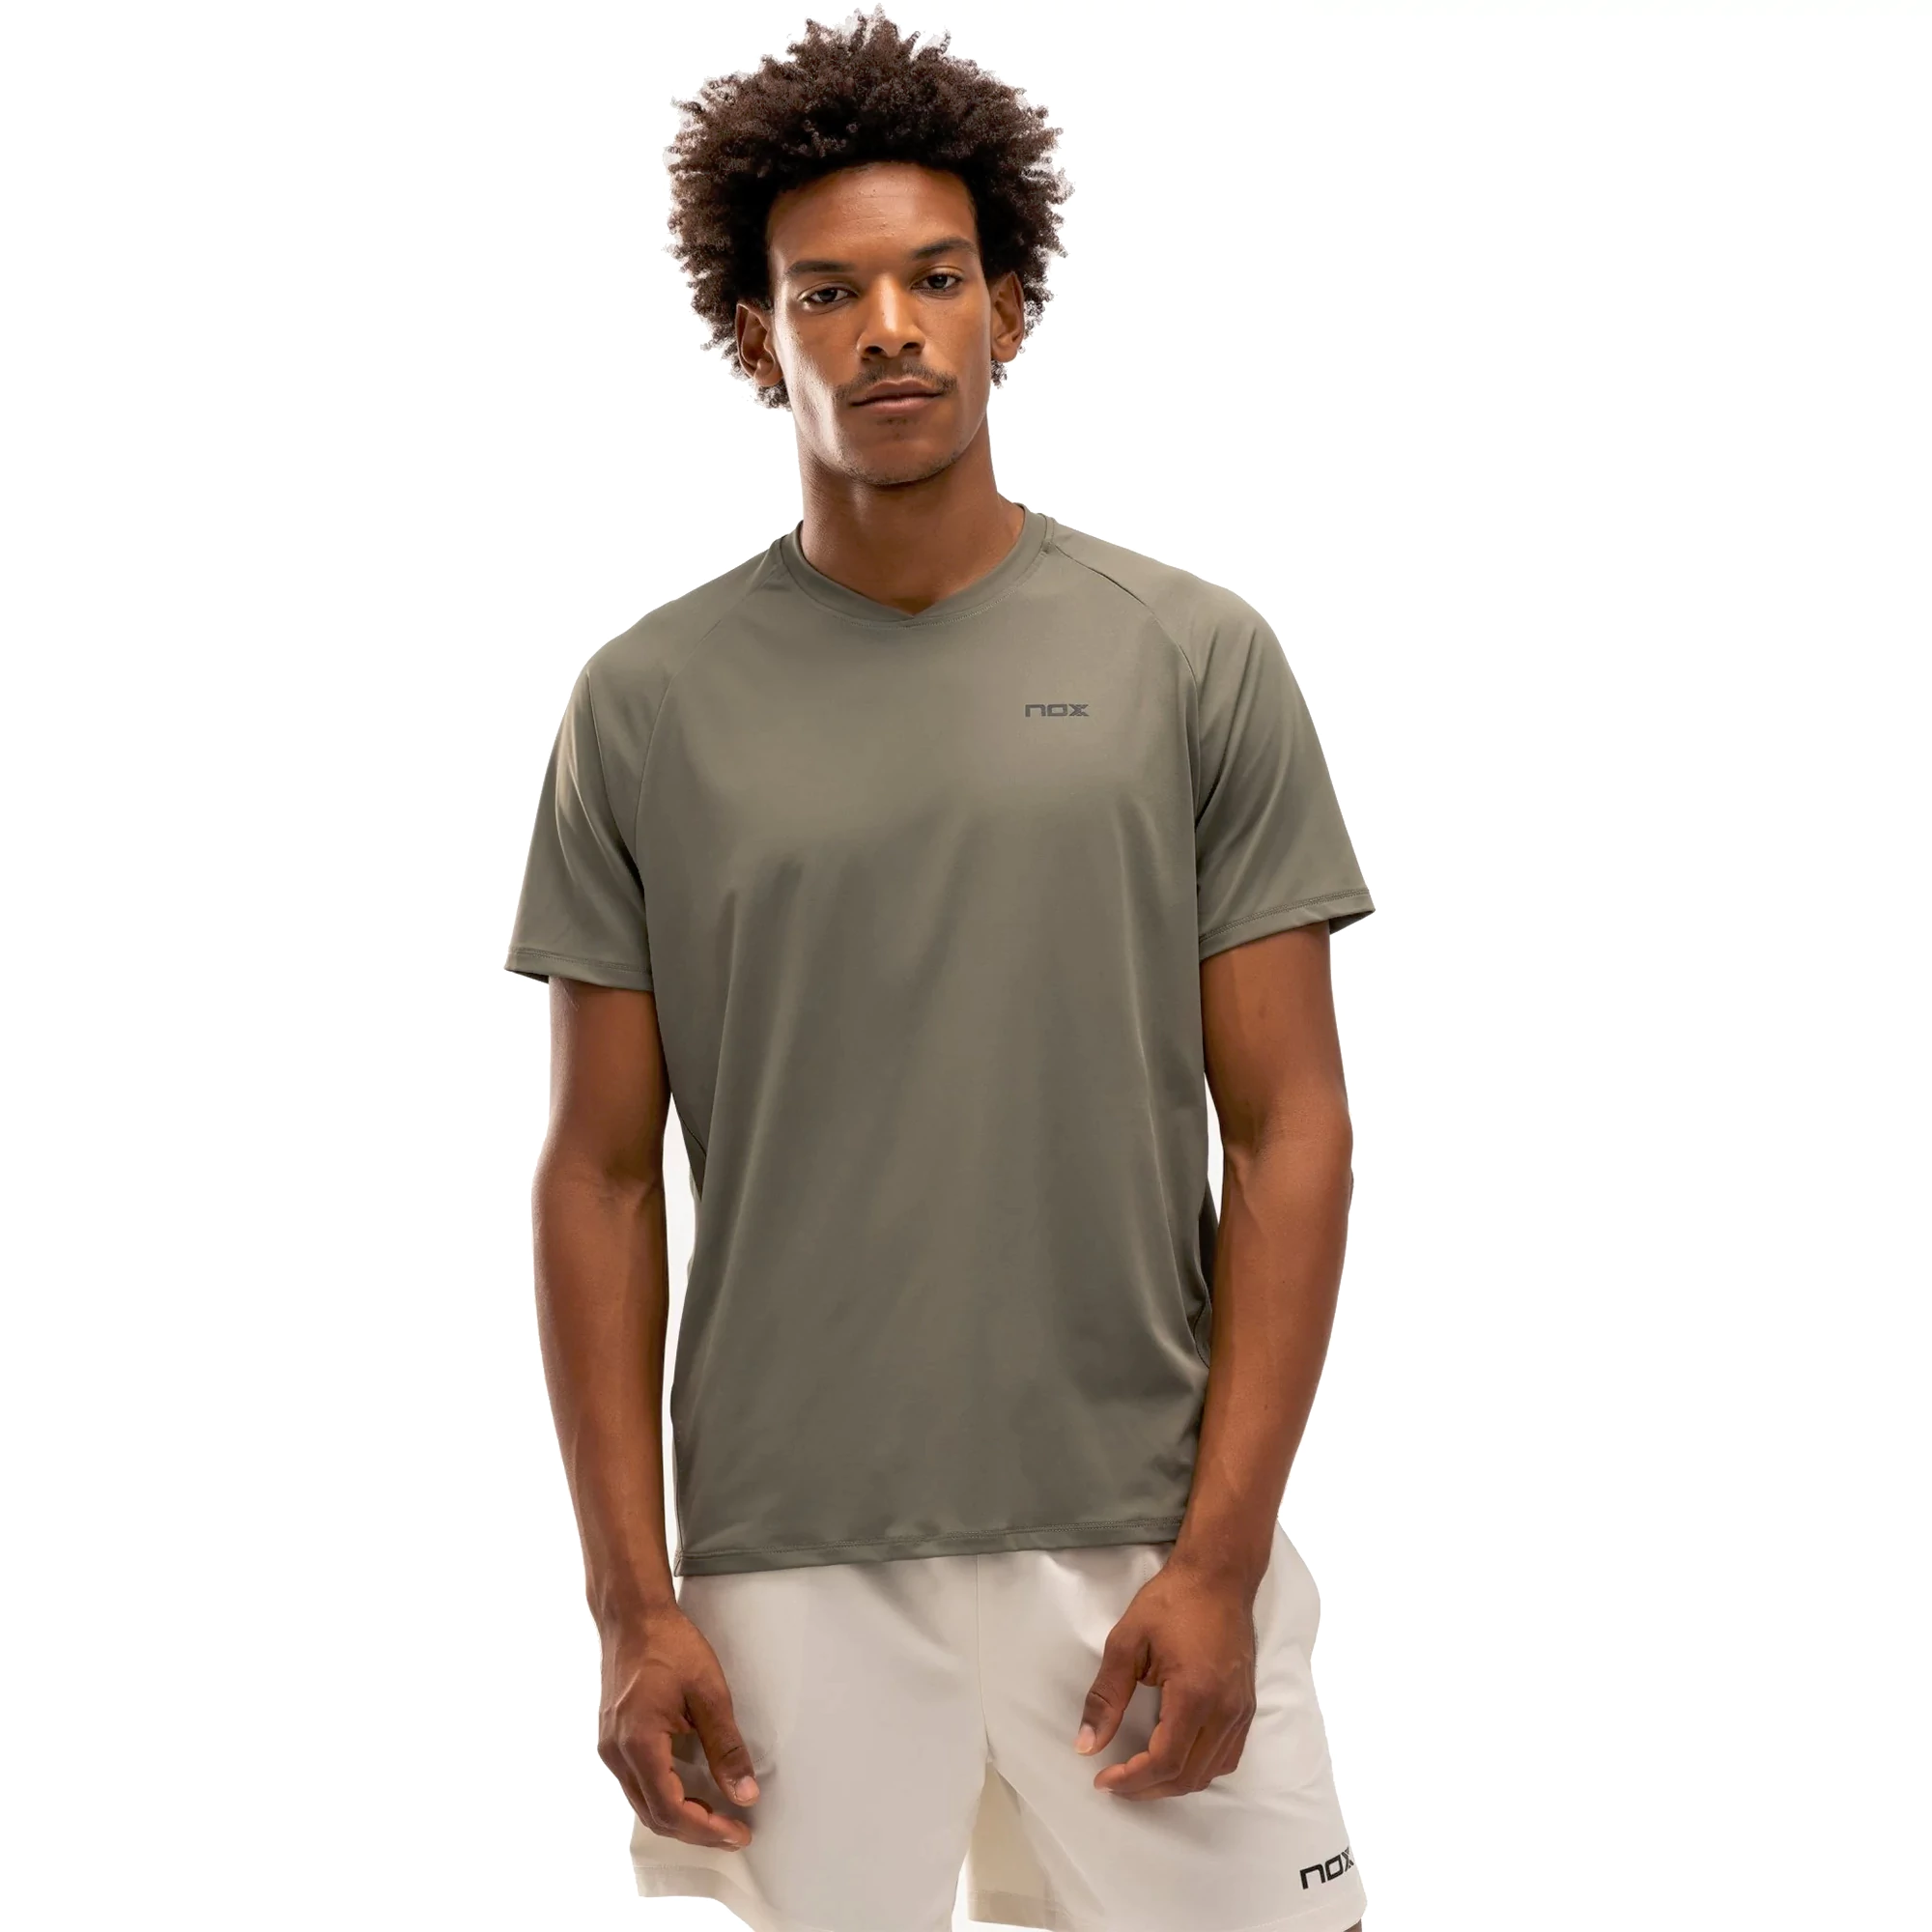 NOX Tshirt Pro Olive Green